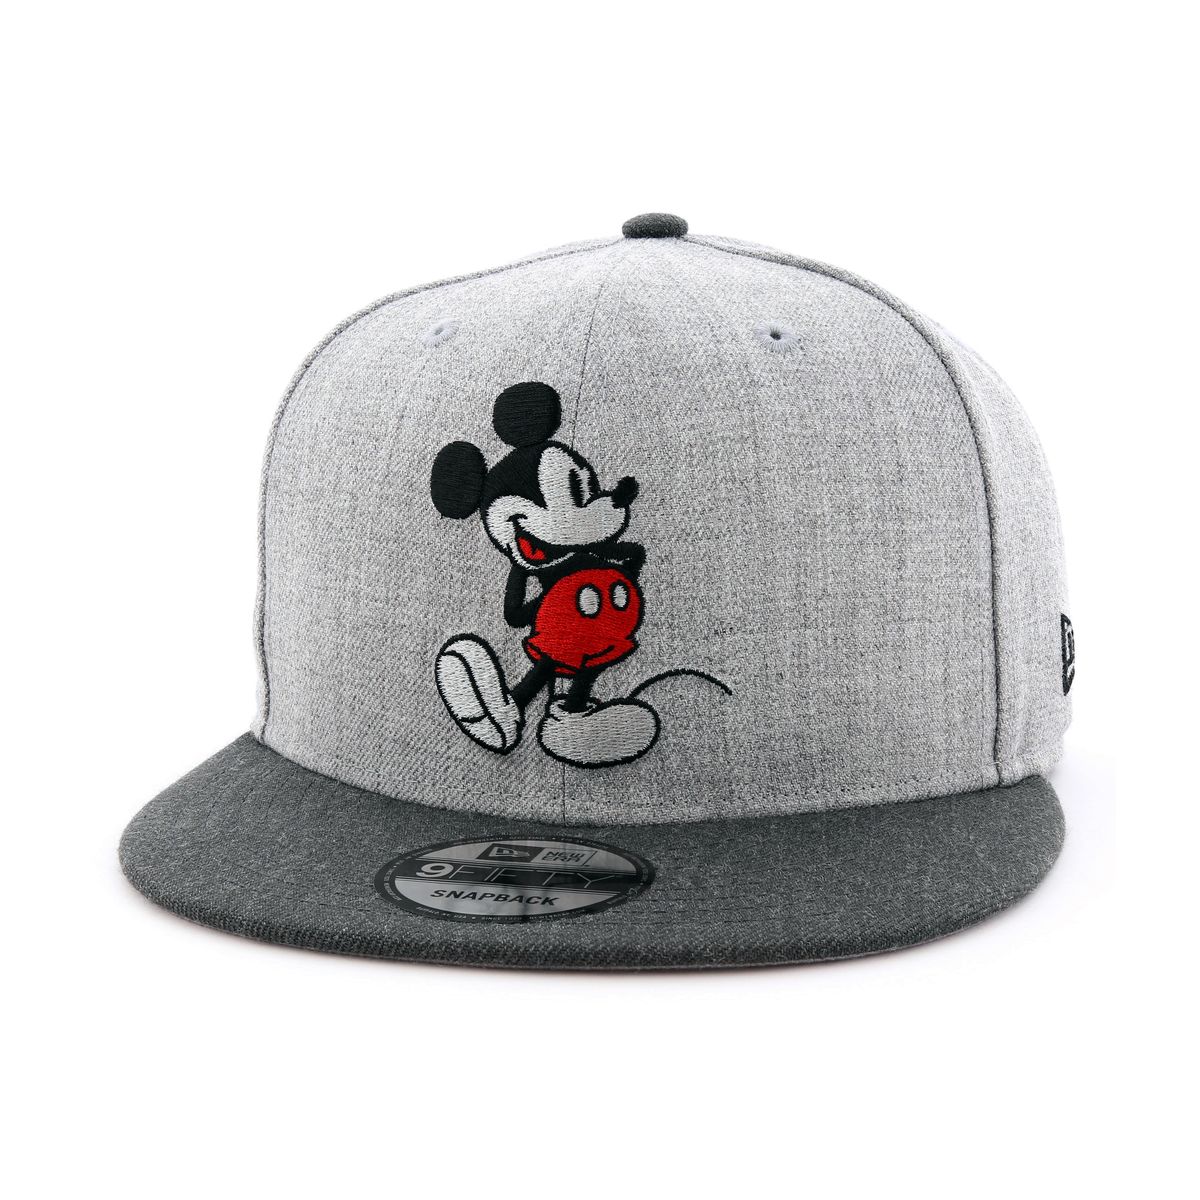 New Era Mickey Mouse Men's Cap Grey